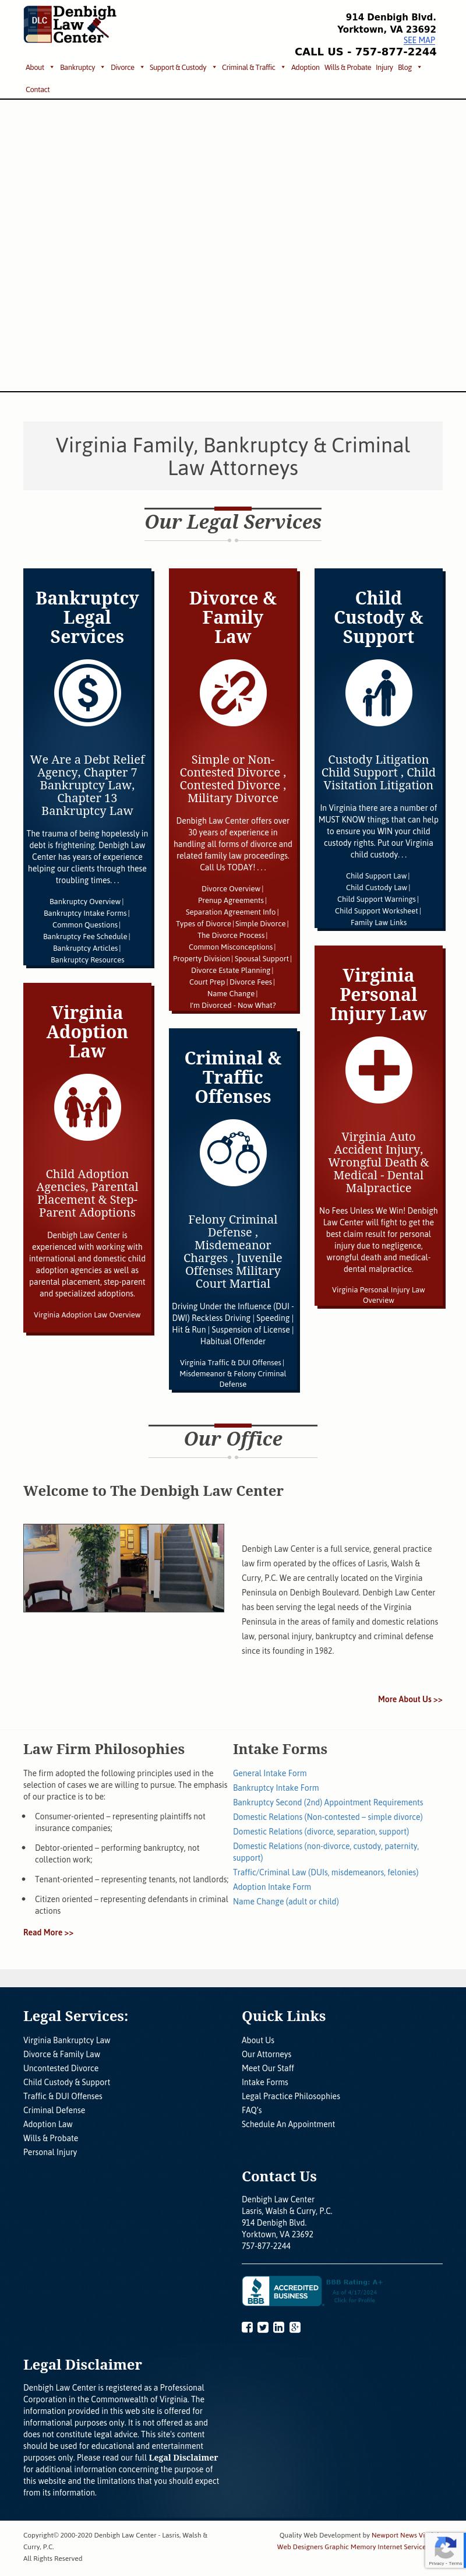 Denbigh Law Center - Yorktown VA Lawyers